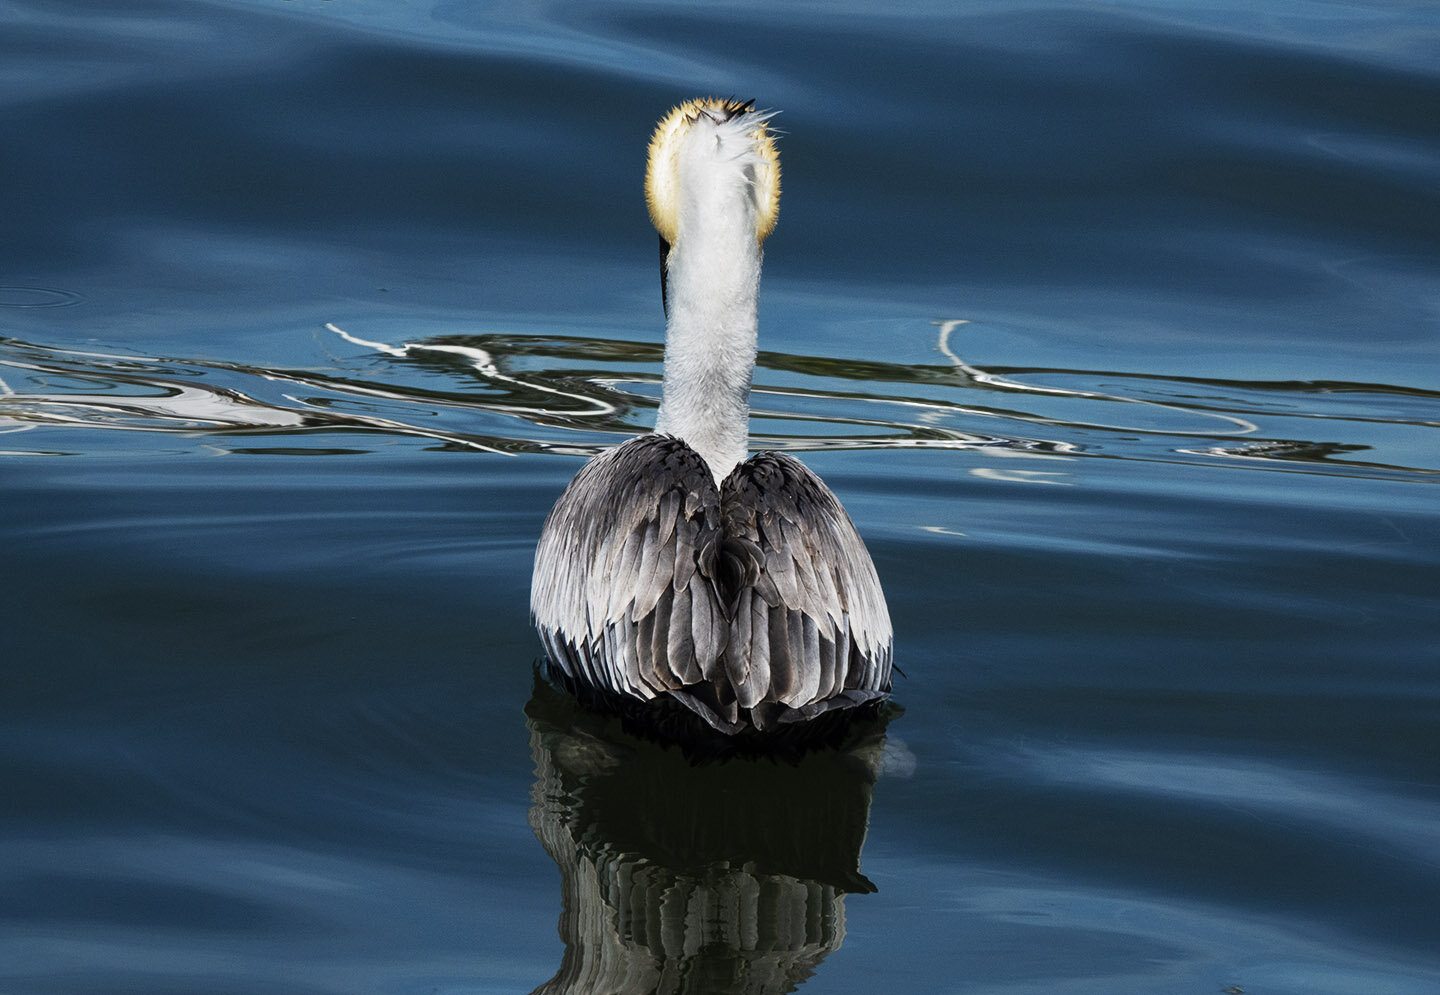 Pelican Back , Reflections .jpg